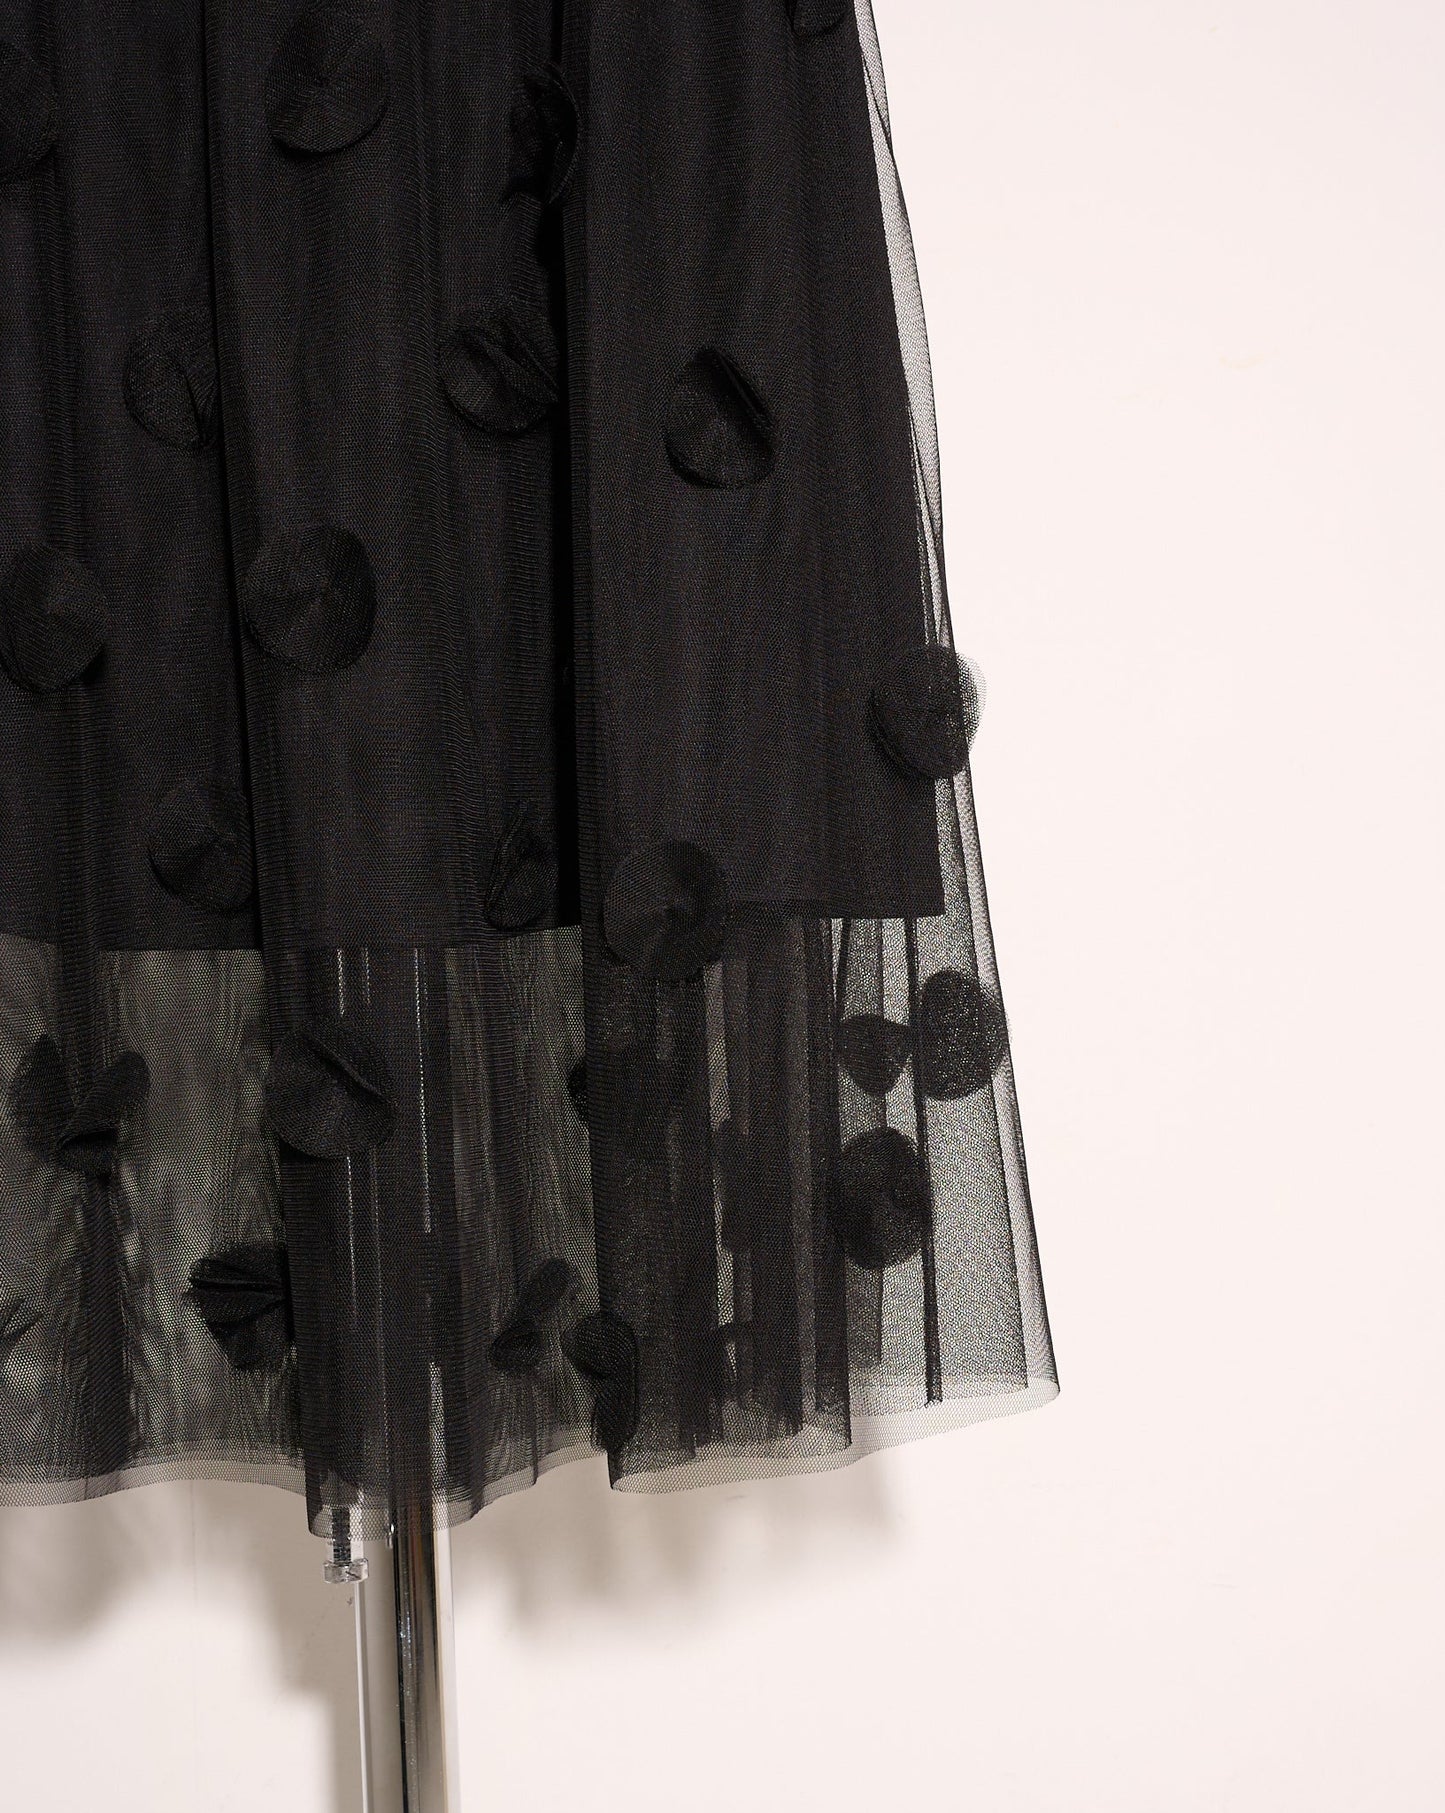 aalis KIAN dot motive mesh skirt (Black)